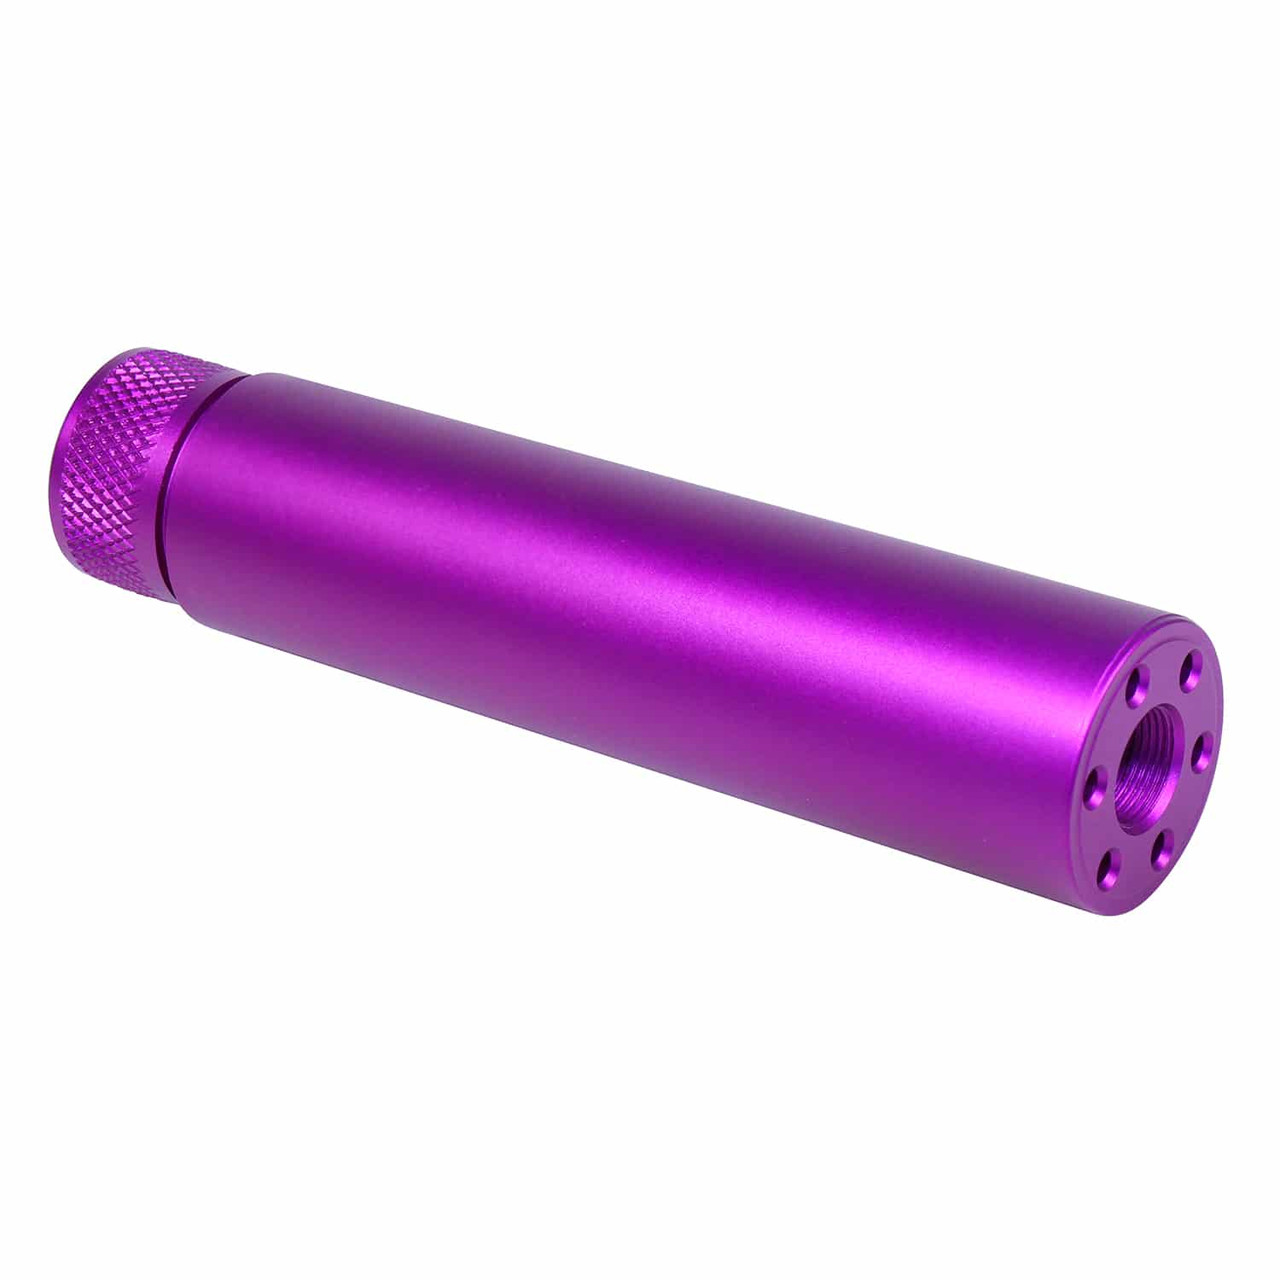 Guntec USA 1326-PURPLE Slip Over Fake Suppressor (Anodized Purple)